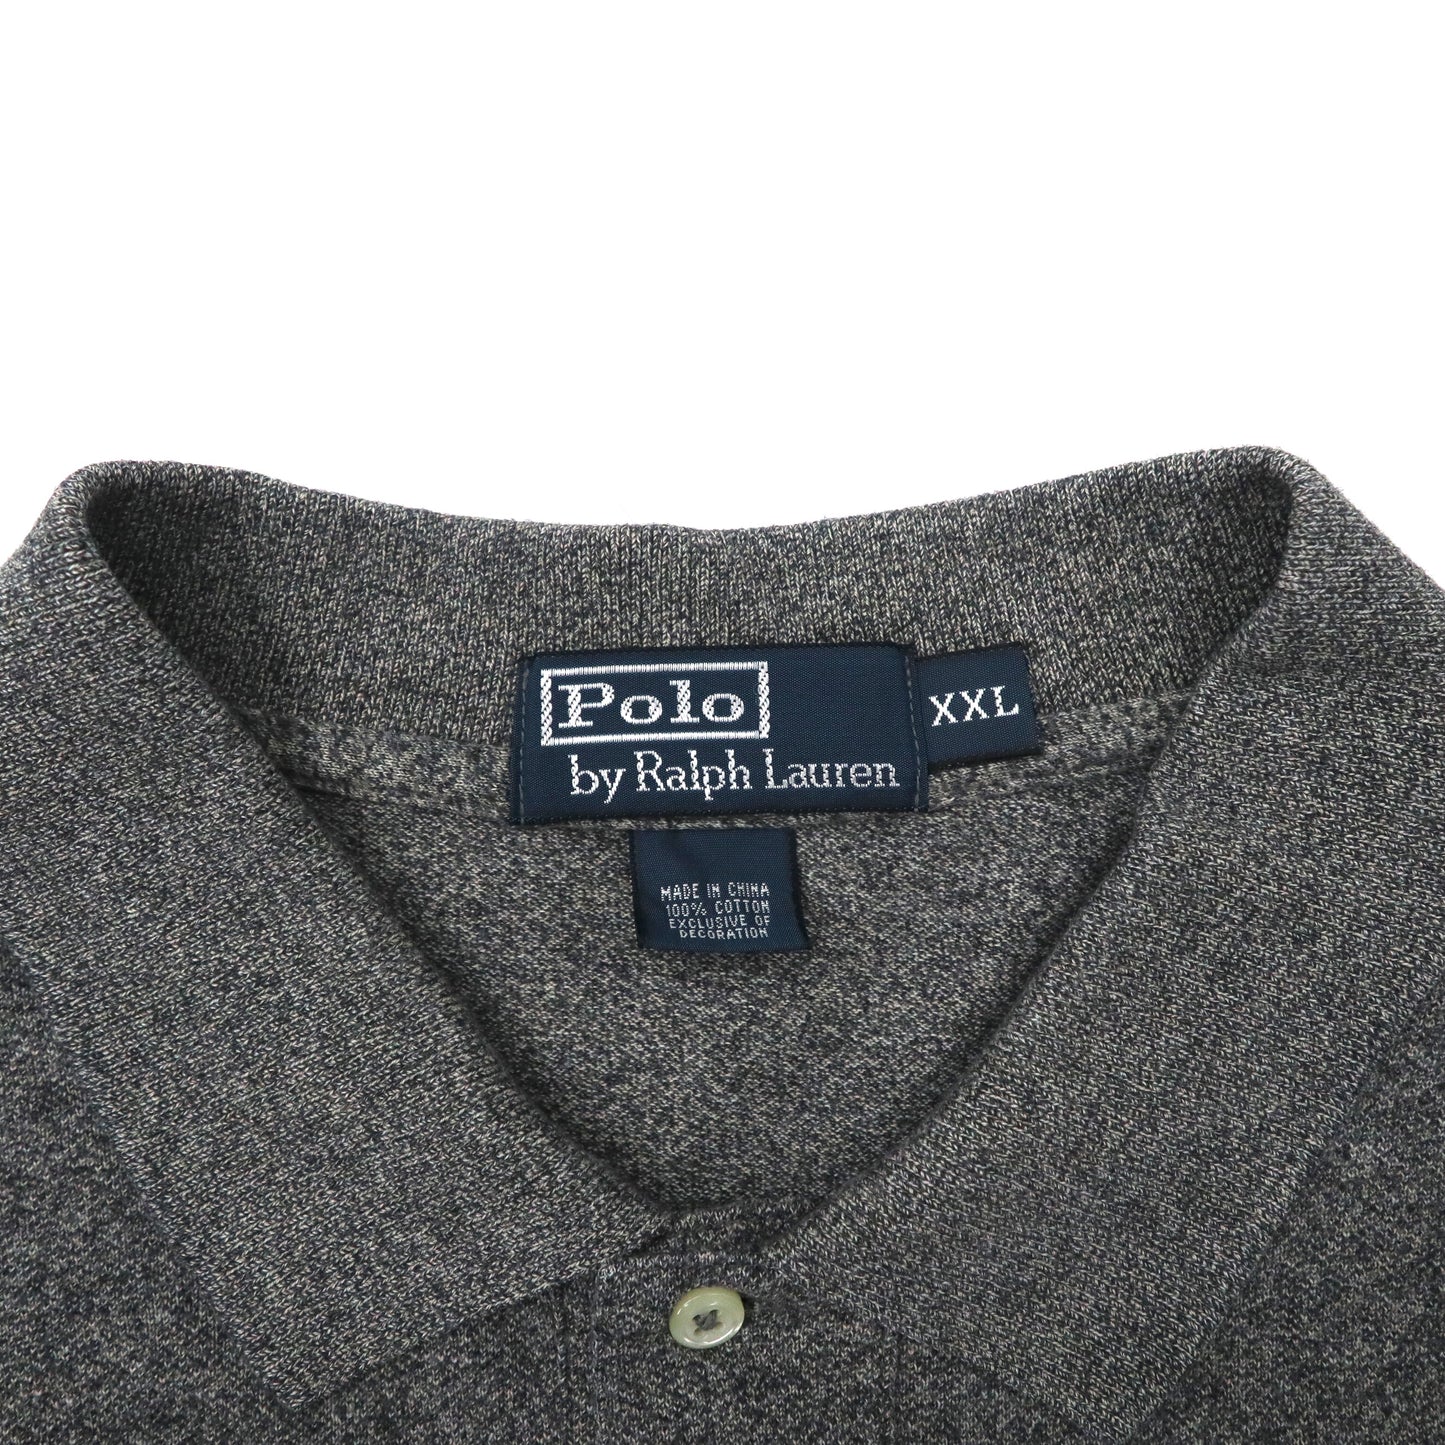 Polo by Ralph Lauren ビッグサイズ 長袖ポロシャツ XXL グレー コットン スモールポニー刺繍